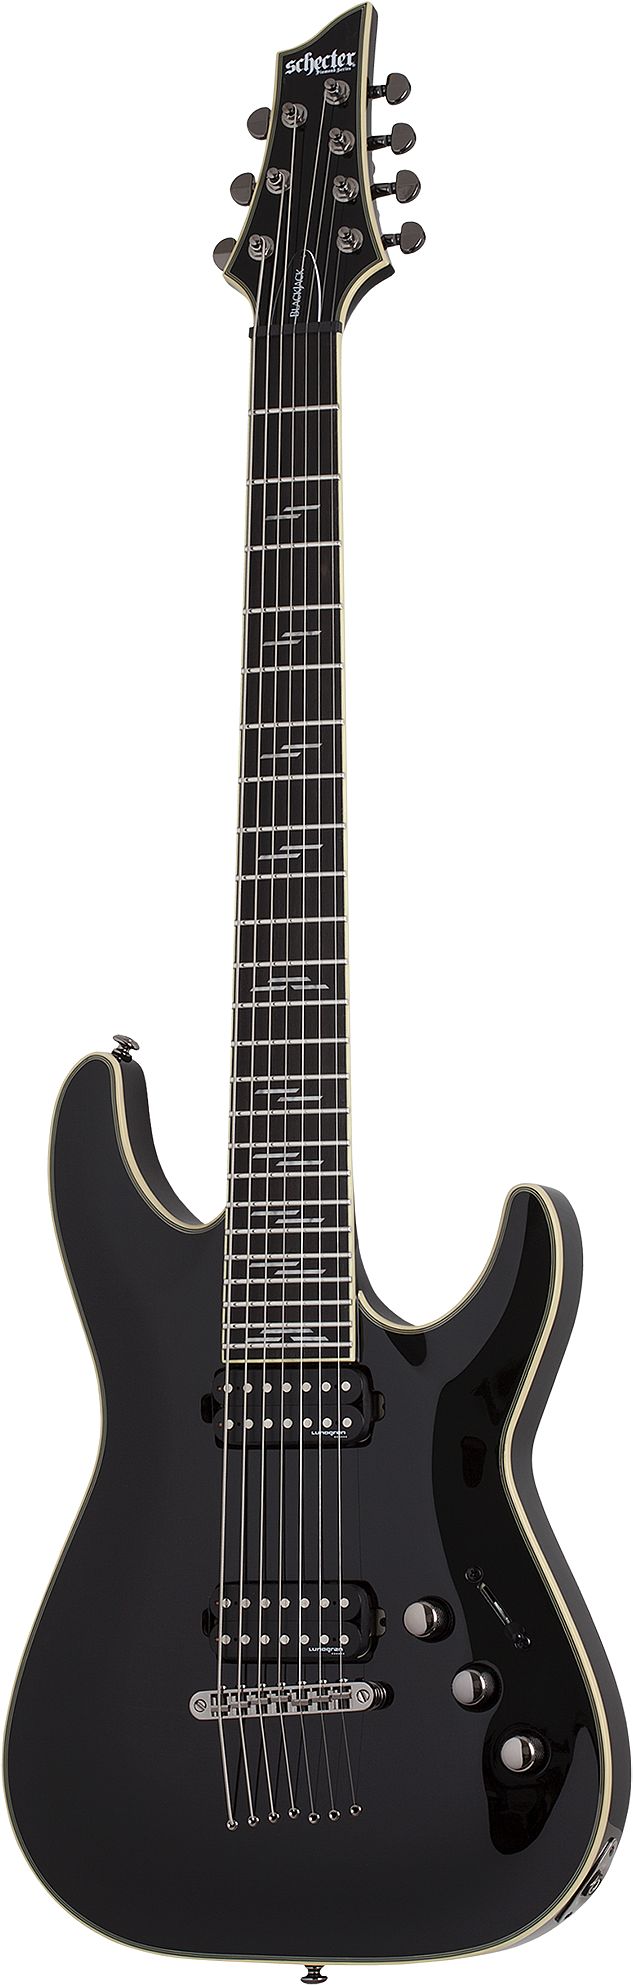 Schecter C-7 Blackjack Series 7 Strings Electric Guitar (Gloss Black) (USED)